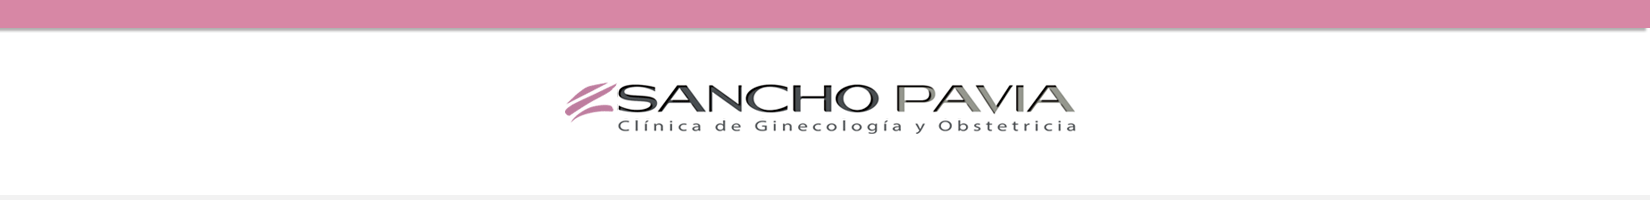 Clinica Sancho Pavia. Ginecología y Obstetricia